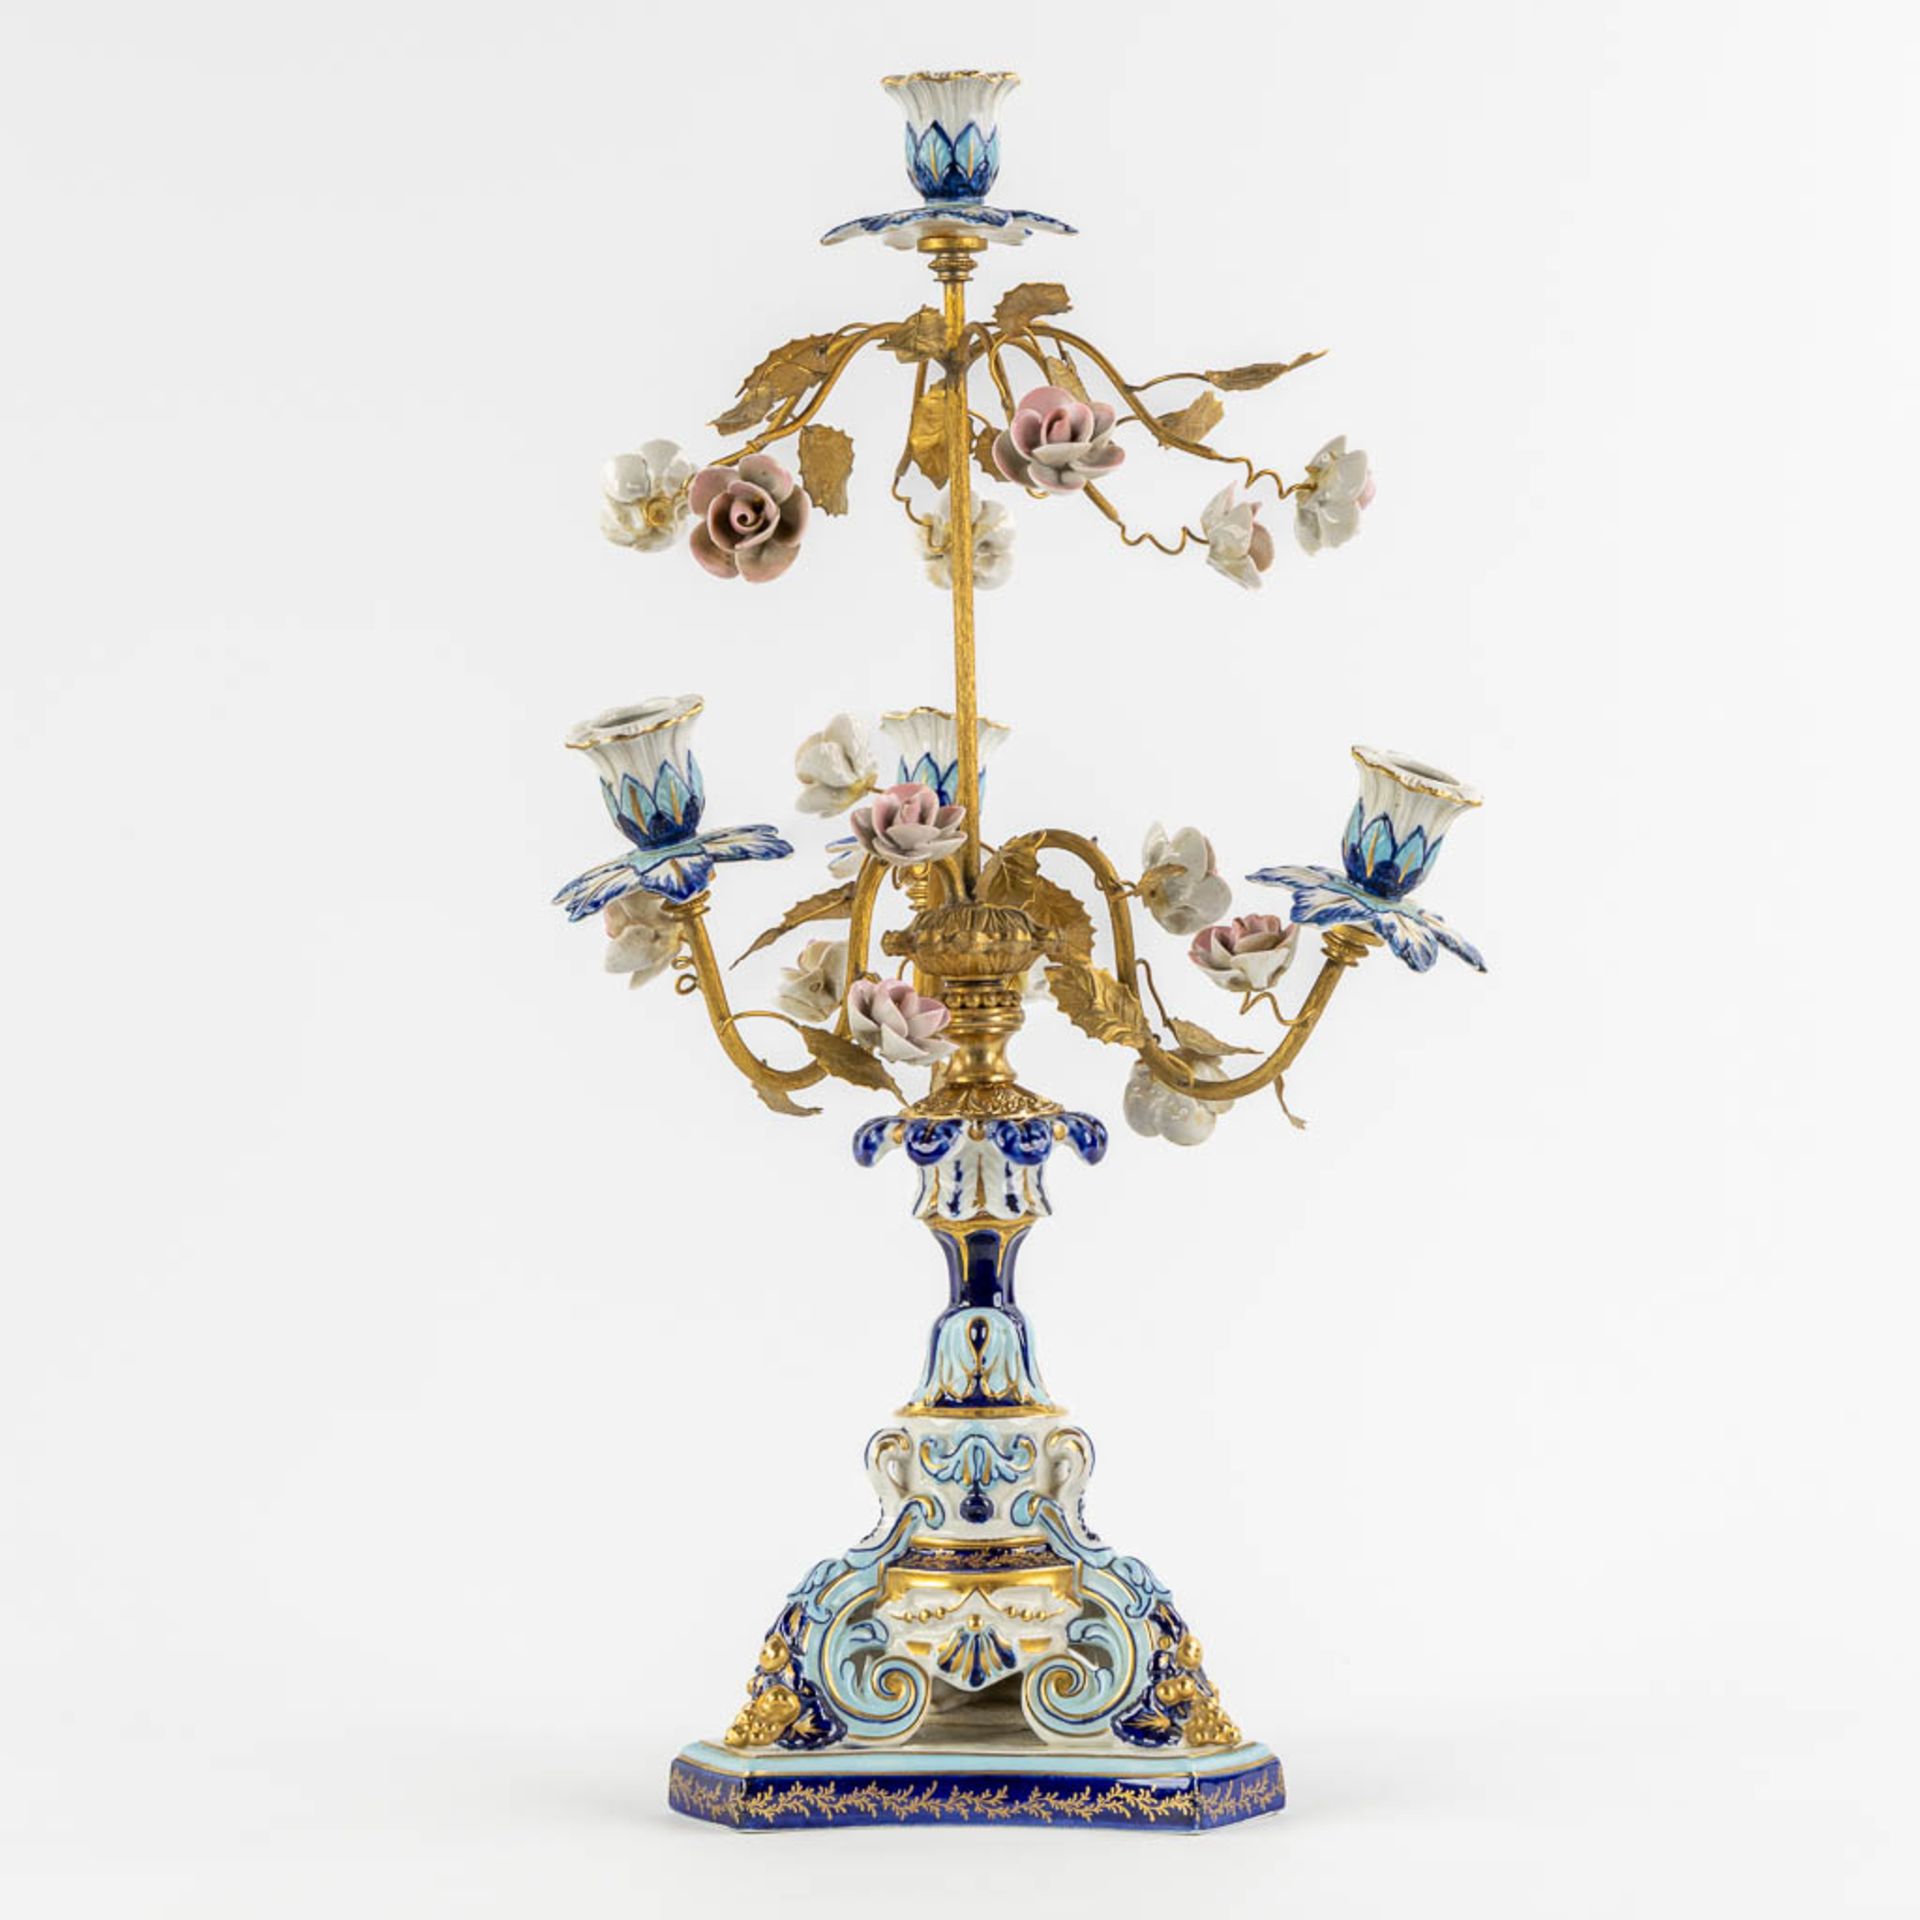 A candelabra, gilt brass and polychrome porcelain with flowers. Sèvres marks. (H:51 x D:24 cm)